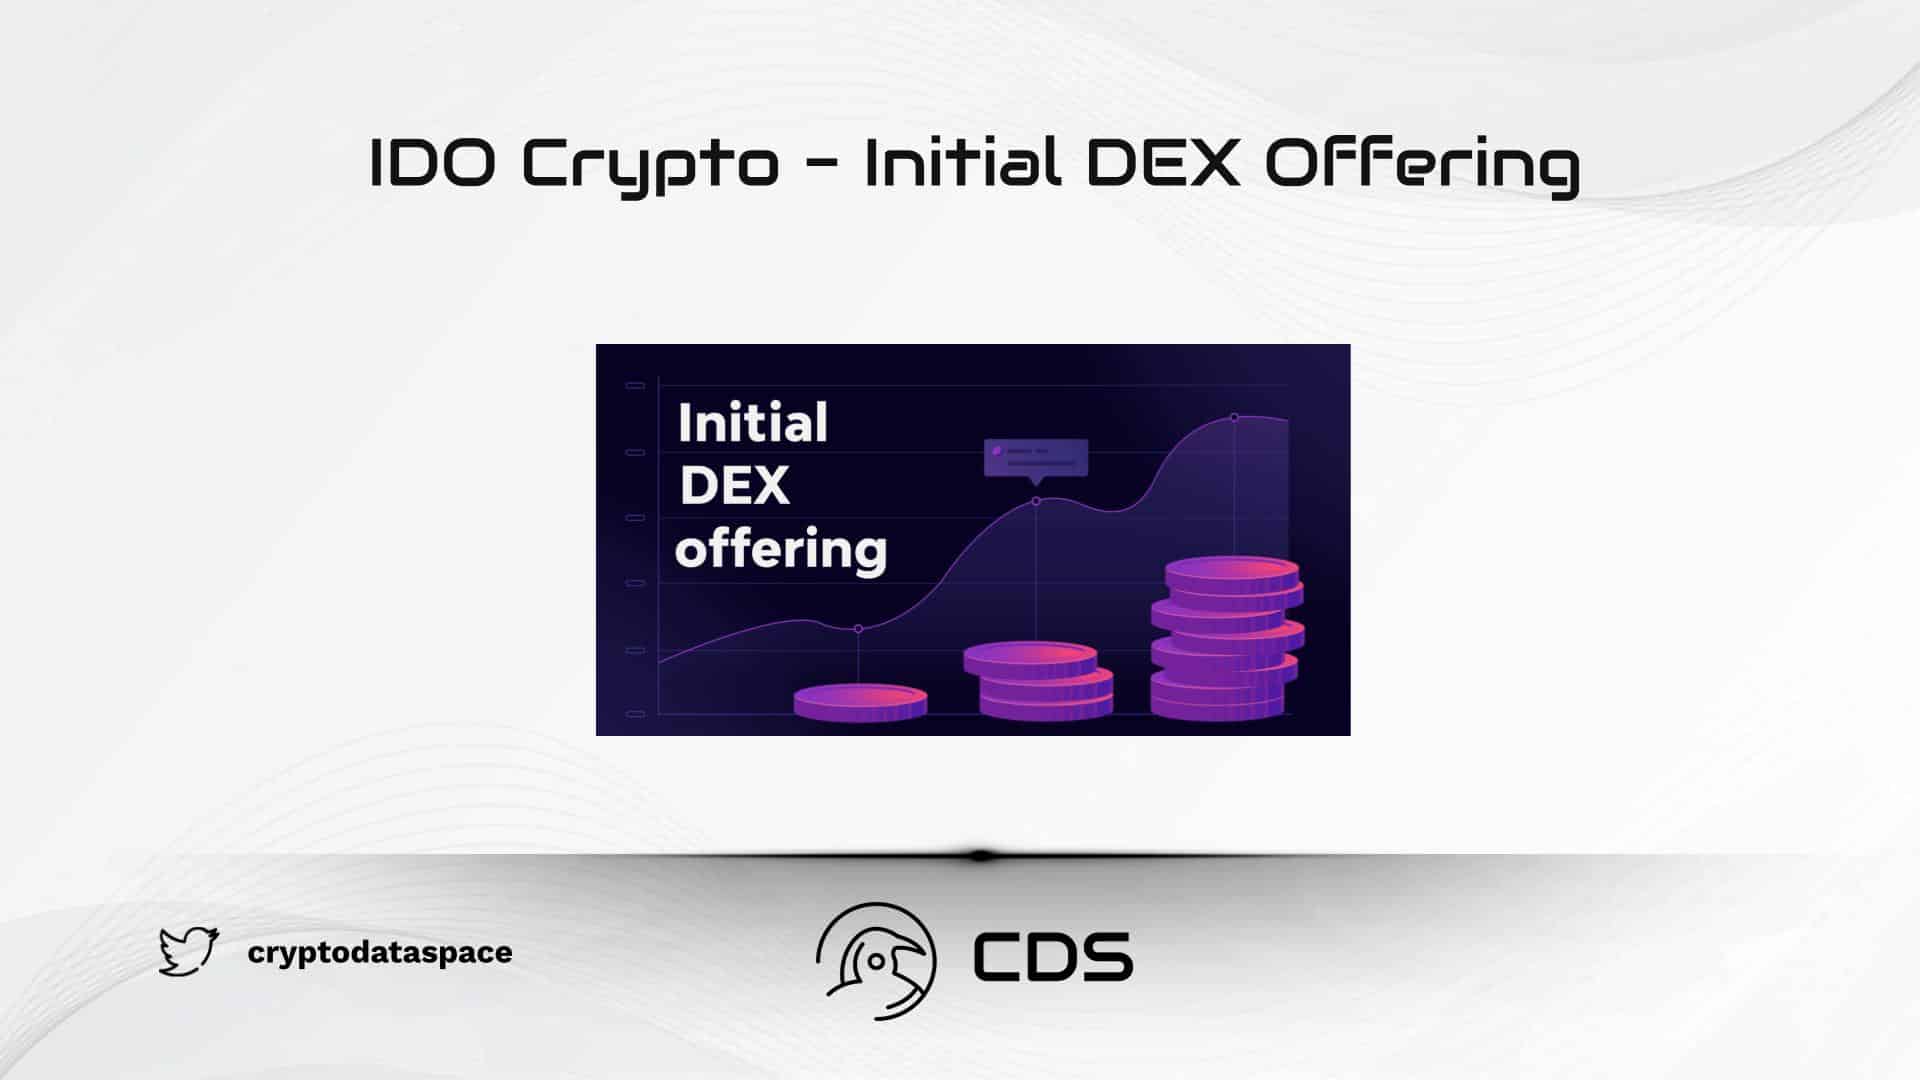 IDO Crypto - Initial DEX Offering